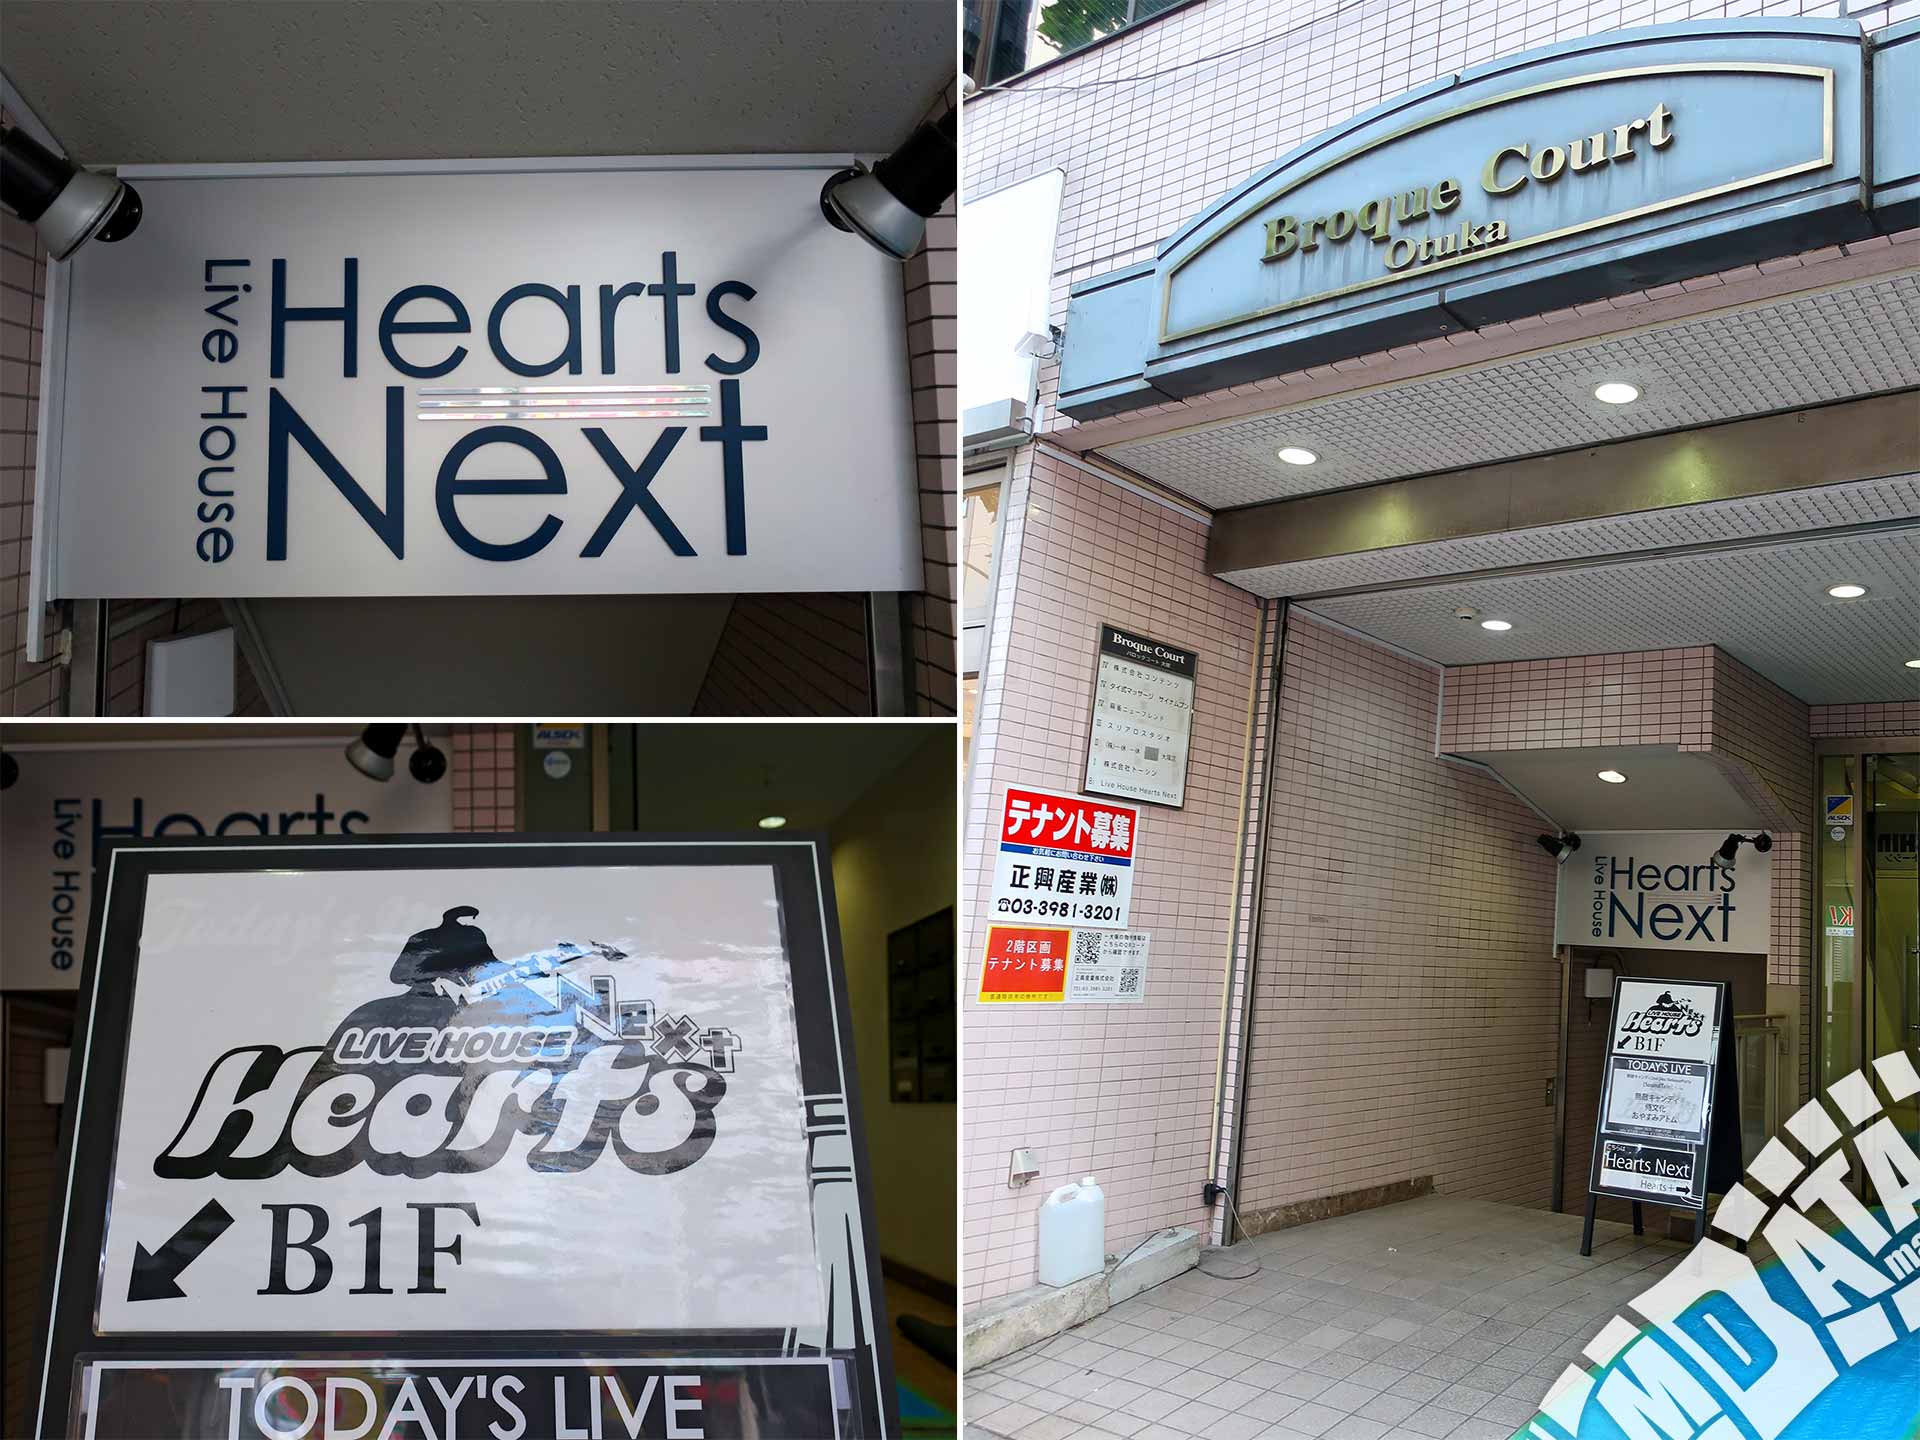 大塚hearts Next 東京都豊島区 Livewalker Com